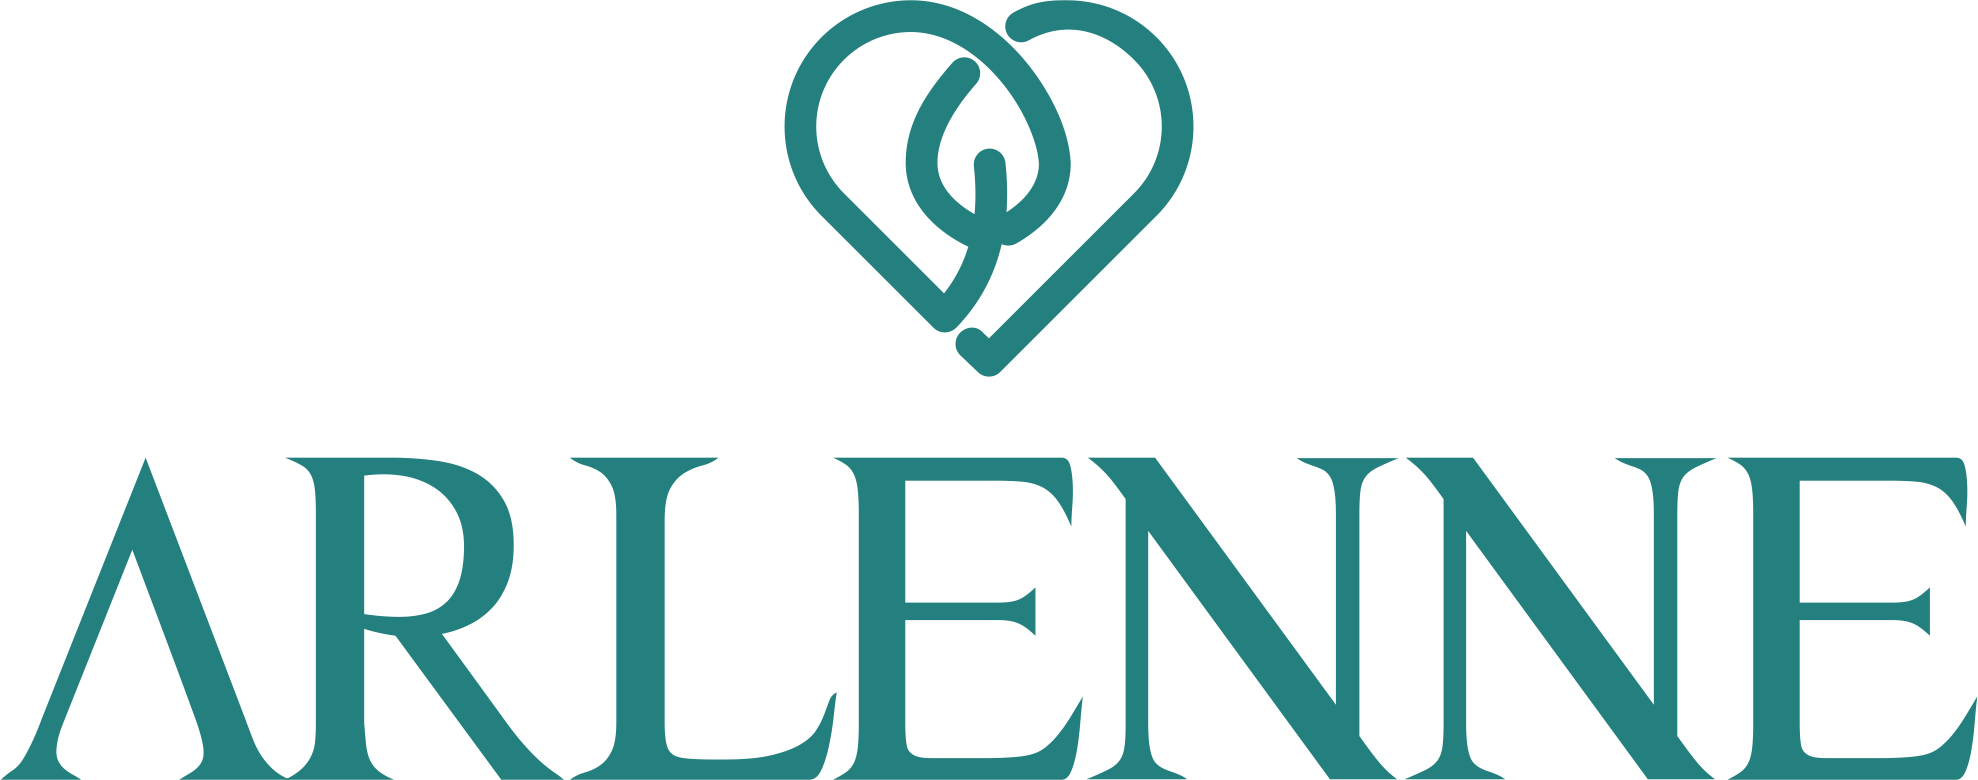 Desain Fix Logo Arlenne